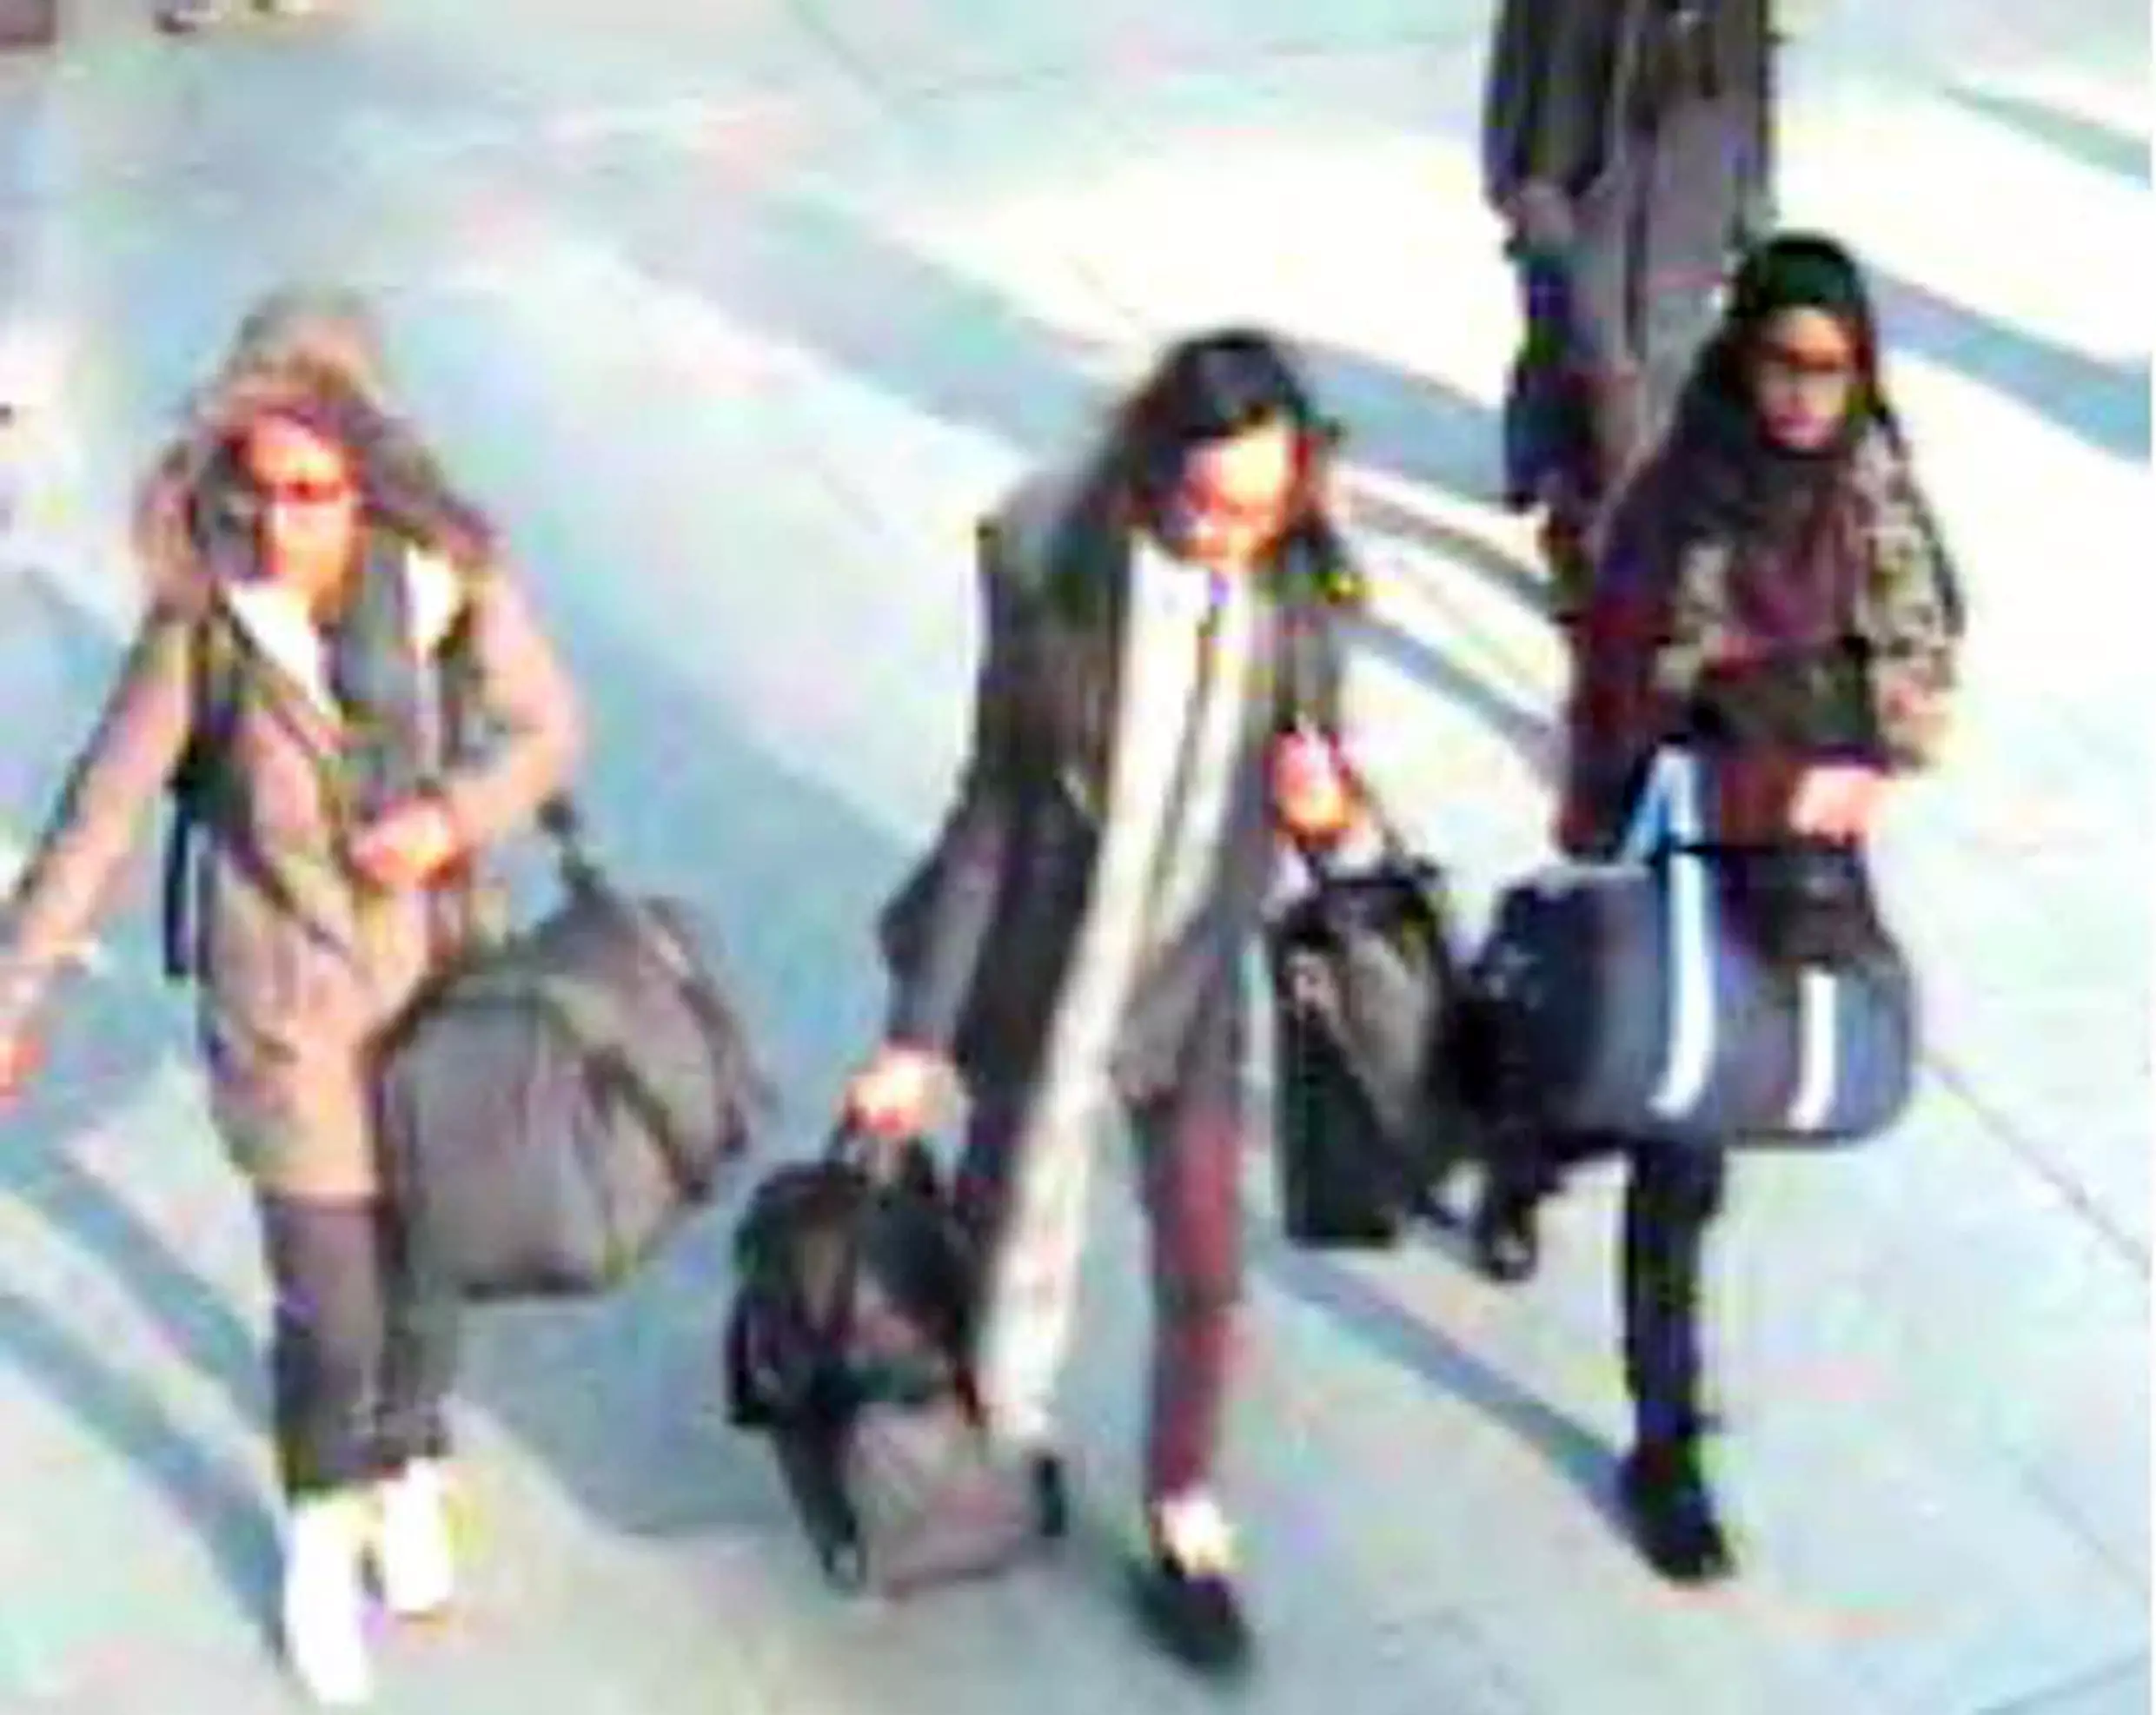 (L-R) Amira Abase, 15, Kadiza Sultana, 16, and Shamima Begum, 15, at Gatwick airport in February 2015.